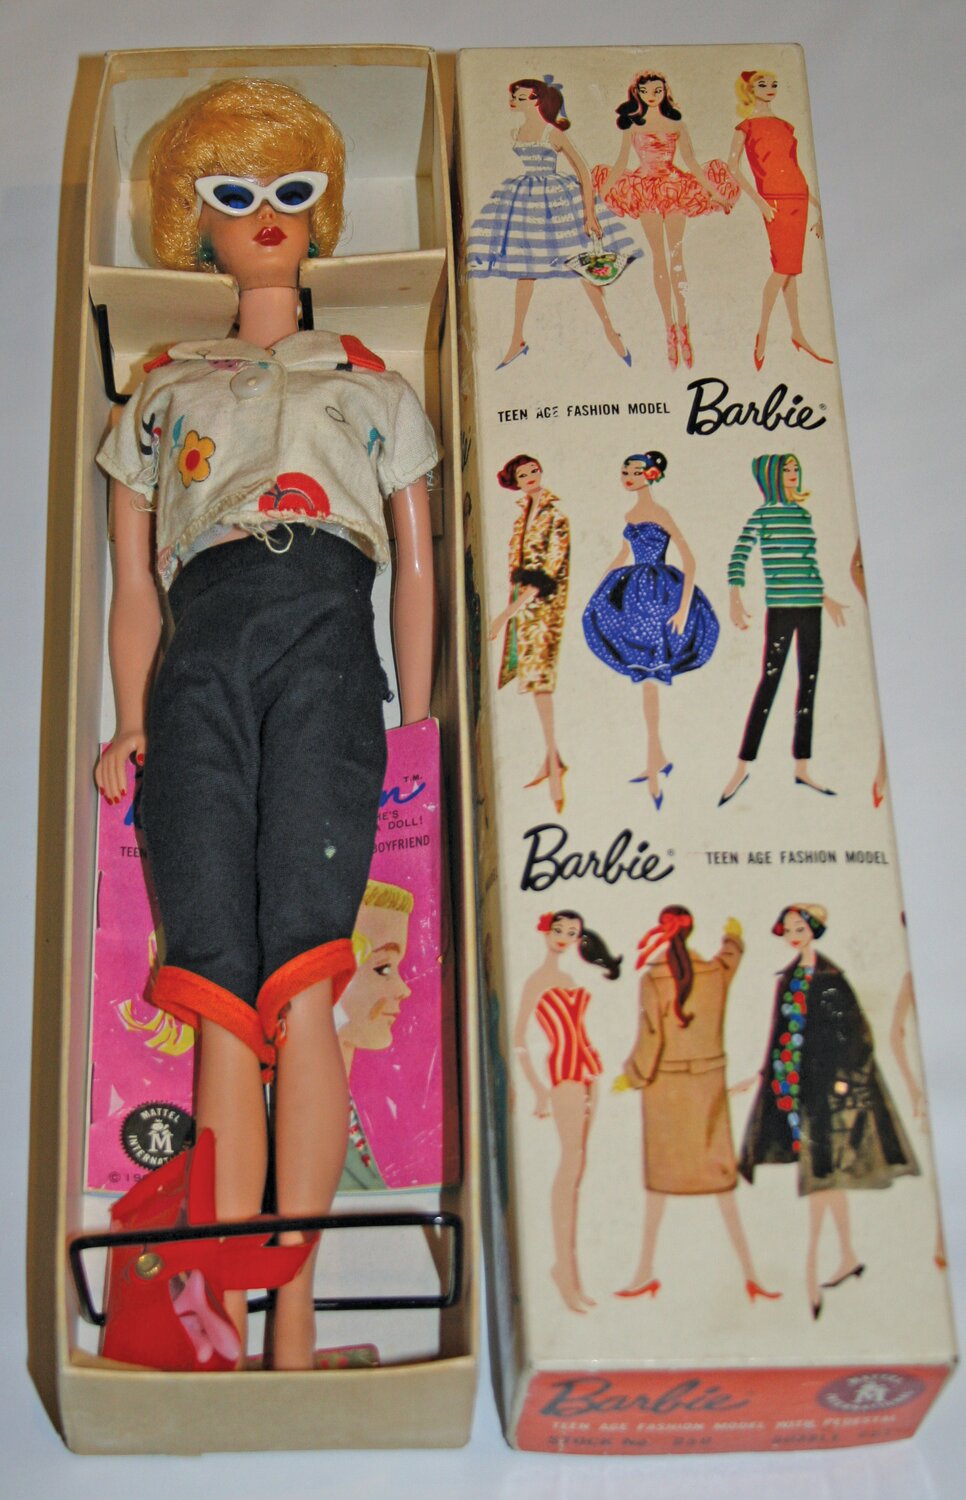 Barbie in its original box, Teenage Fashion Model Doll